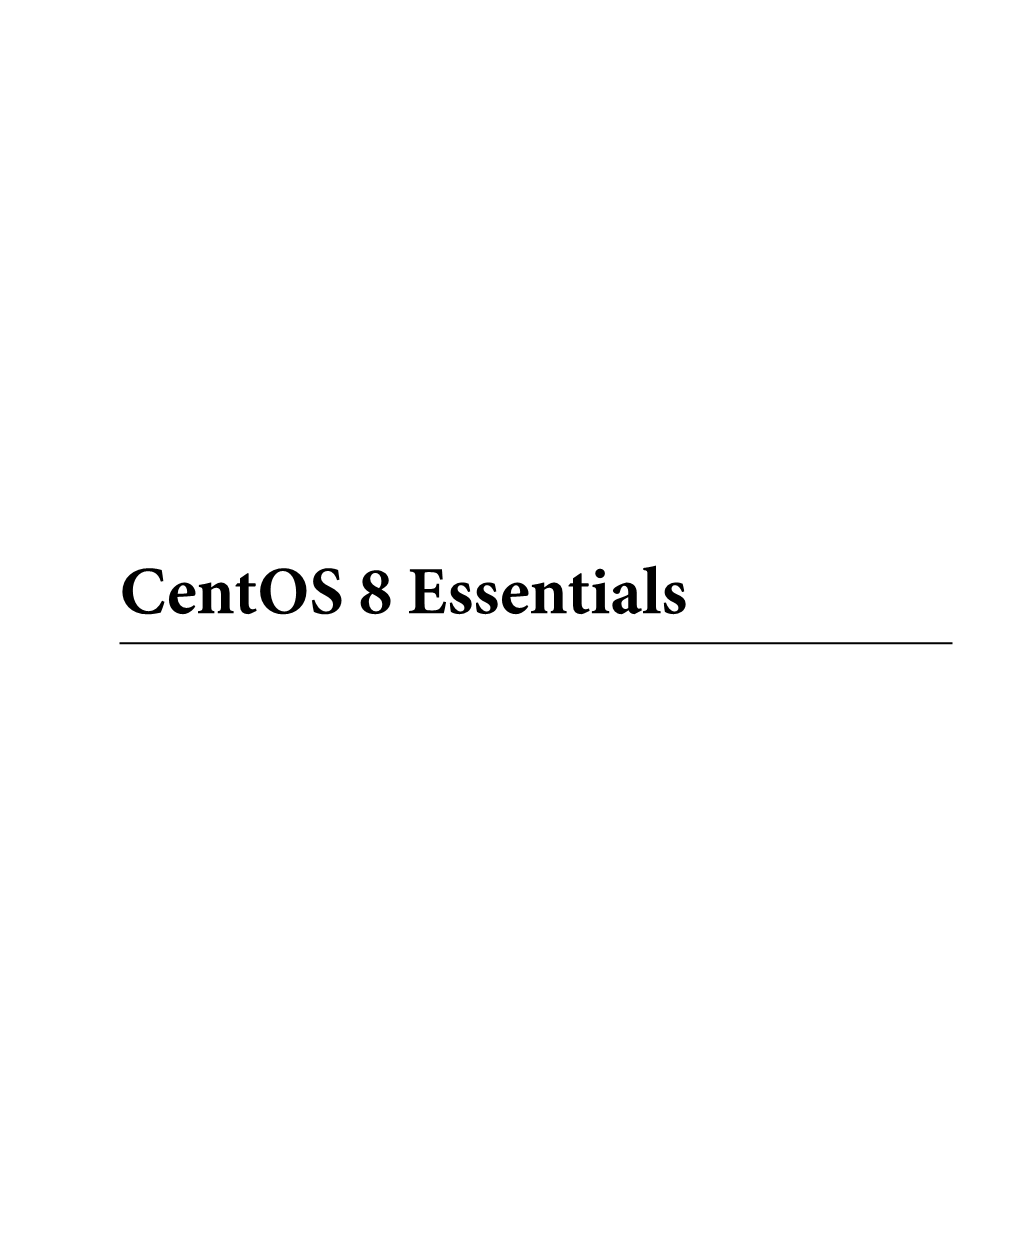 Centos 8 Essentials Centos 8 Essentials ISBN-13: 978-1-951442-08-8 © 2019 Neil Smyth / Payload Media, Inc